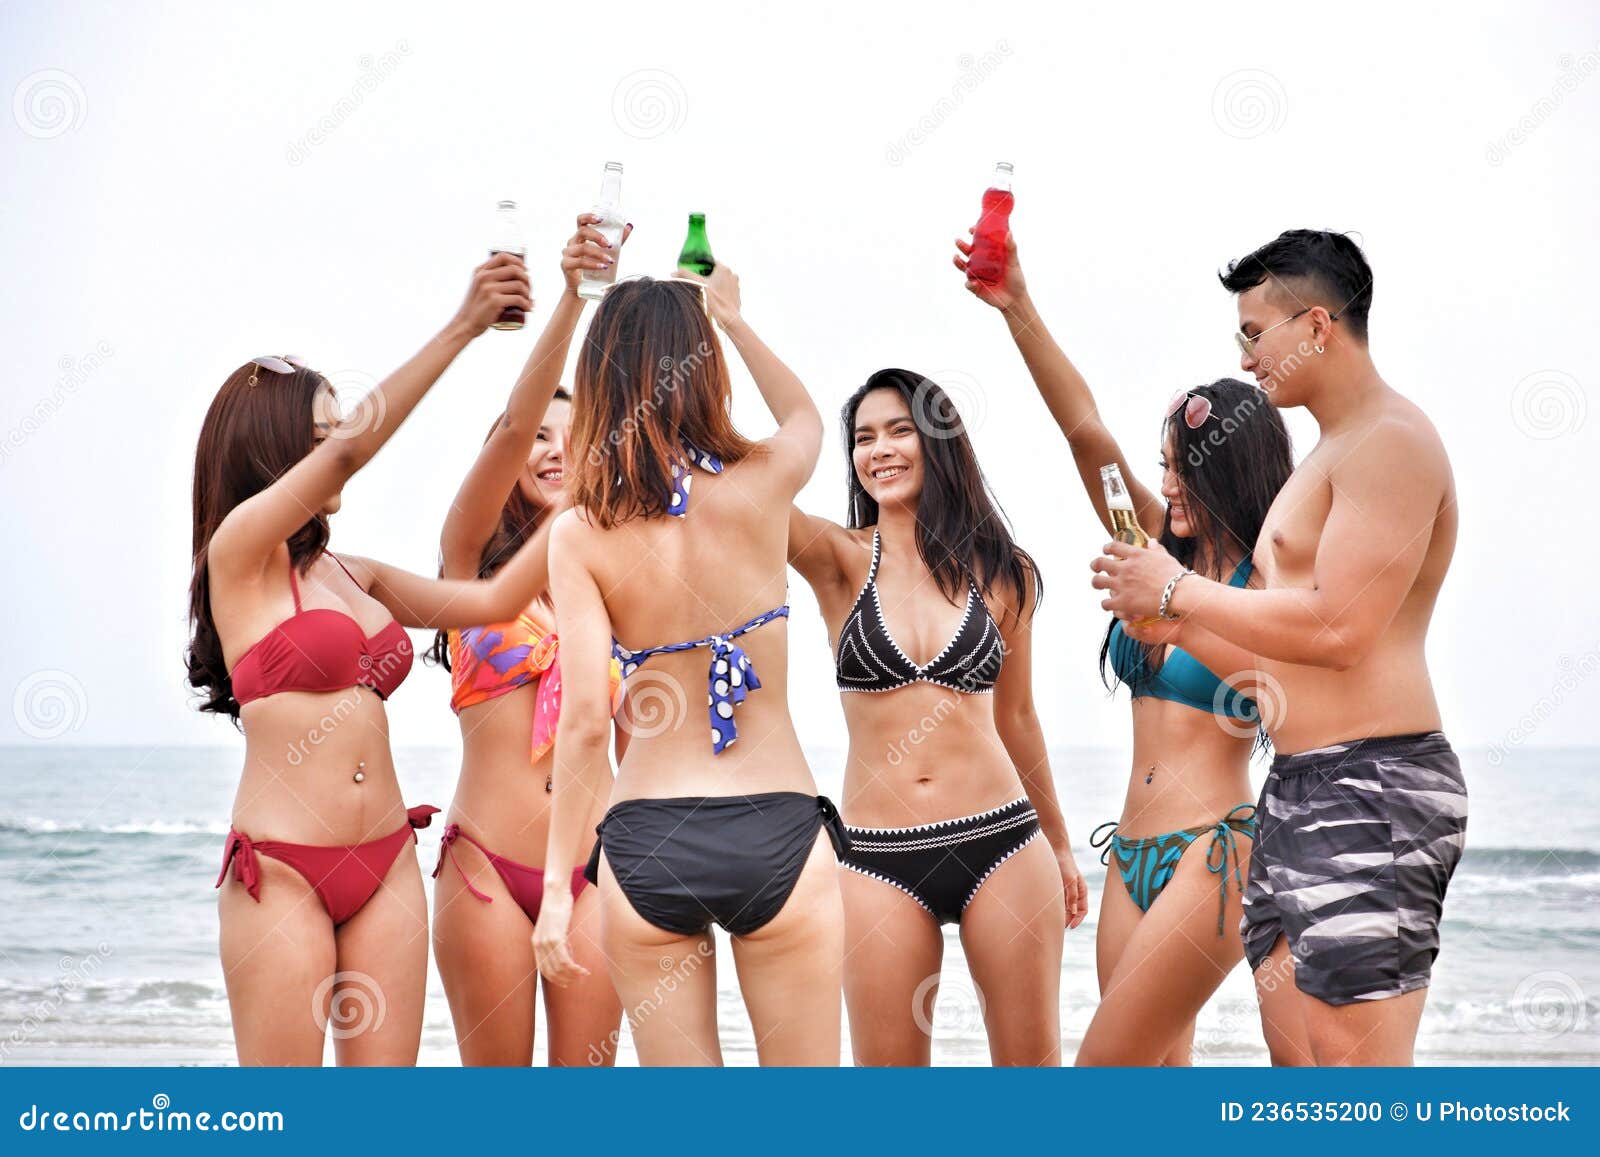 Bikini Party Seaside Enjoy Meeting Group Friends Having Fun